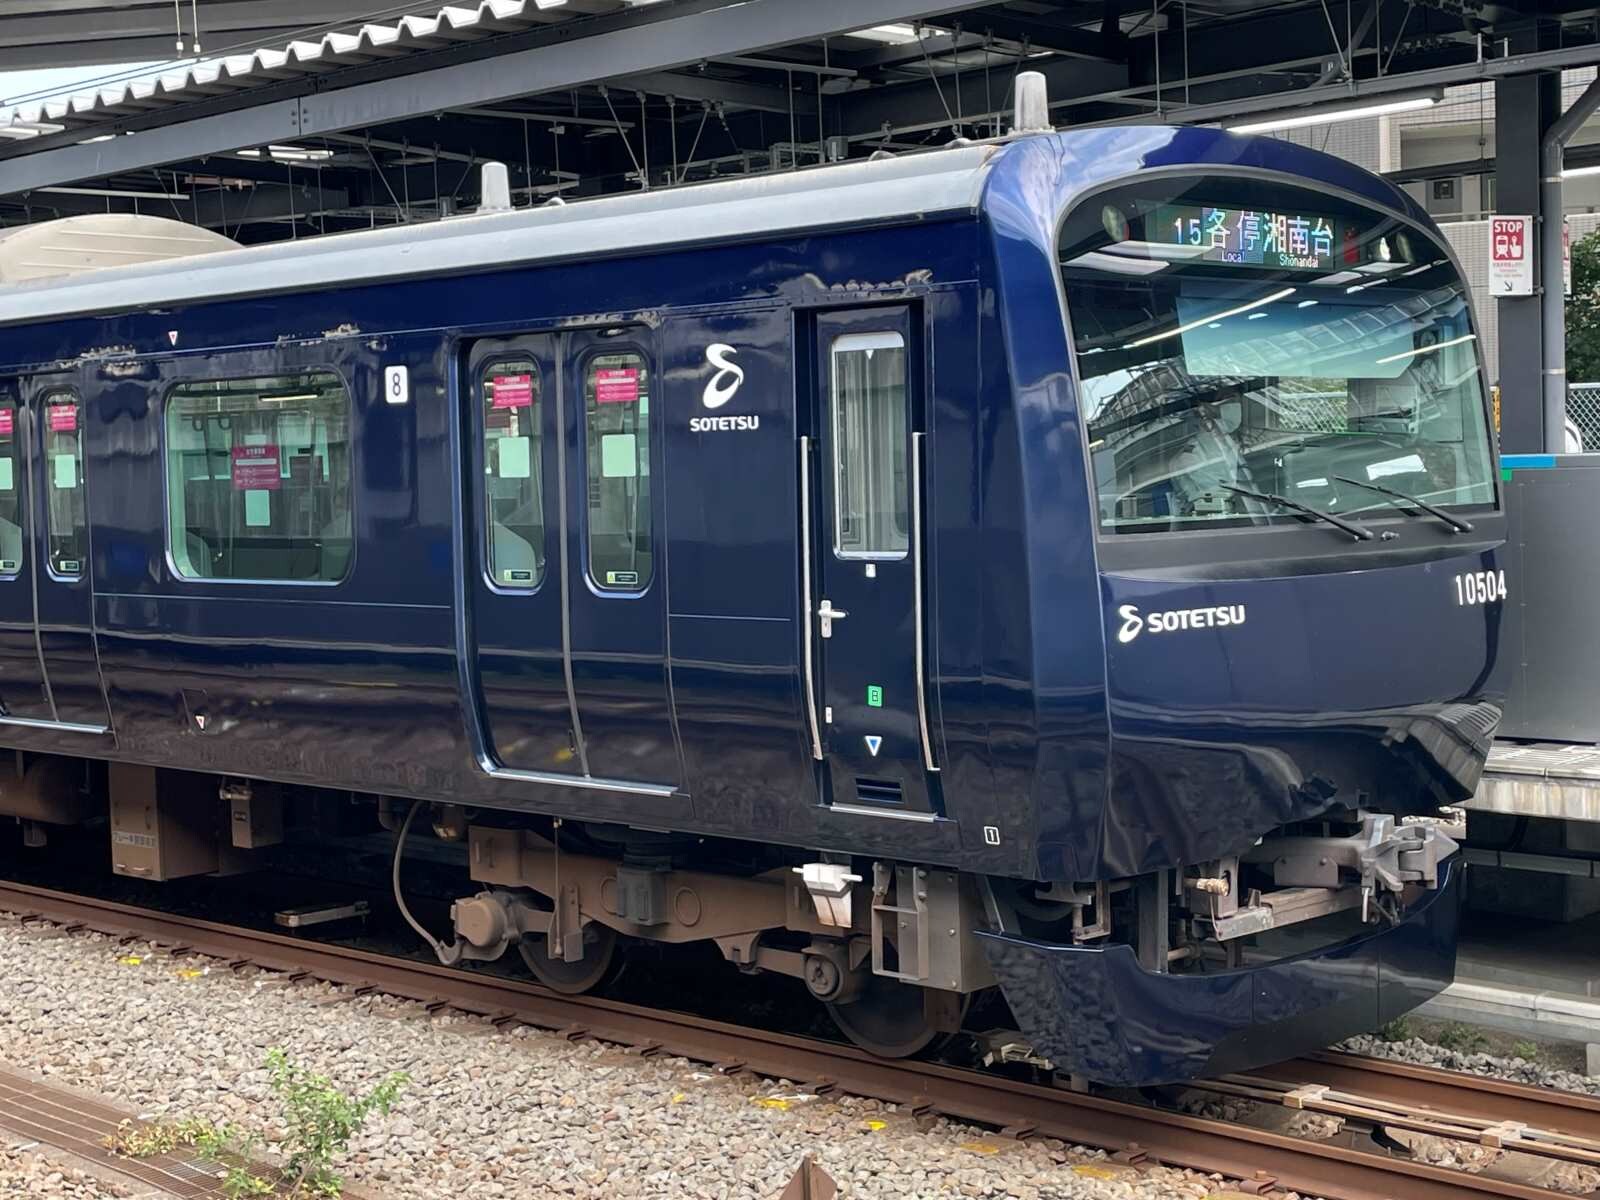 「YOKOHAMA NAVYBLUE」塗装の新型第1号となった2018年デビューの相鉄・20000系。12000系と違い先頭に地下鉄運用時用の貫通扉があるのが特徴